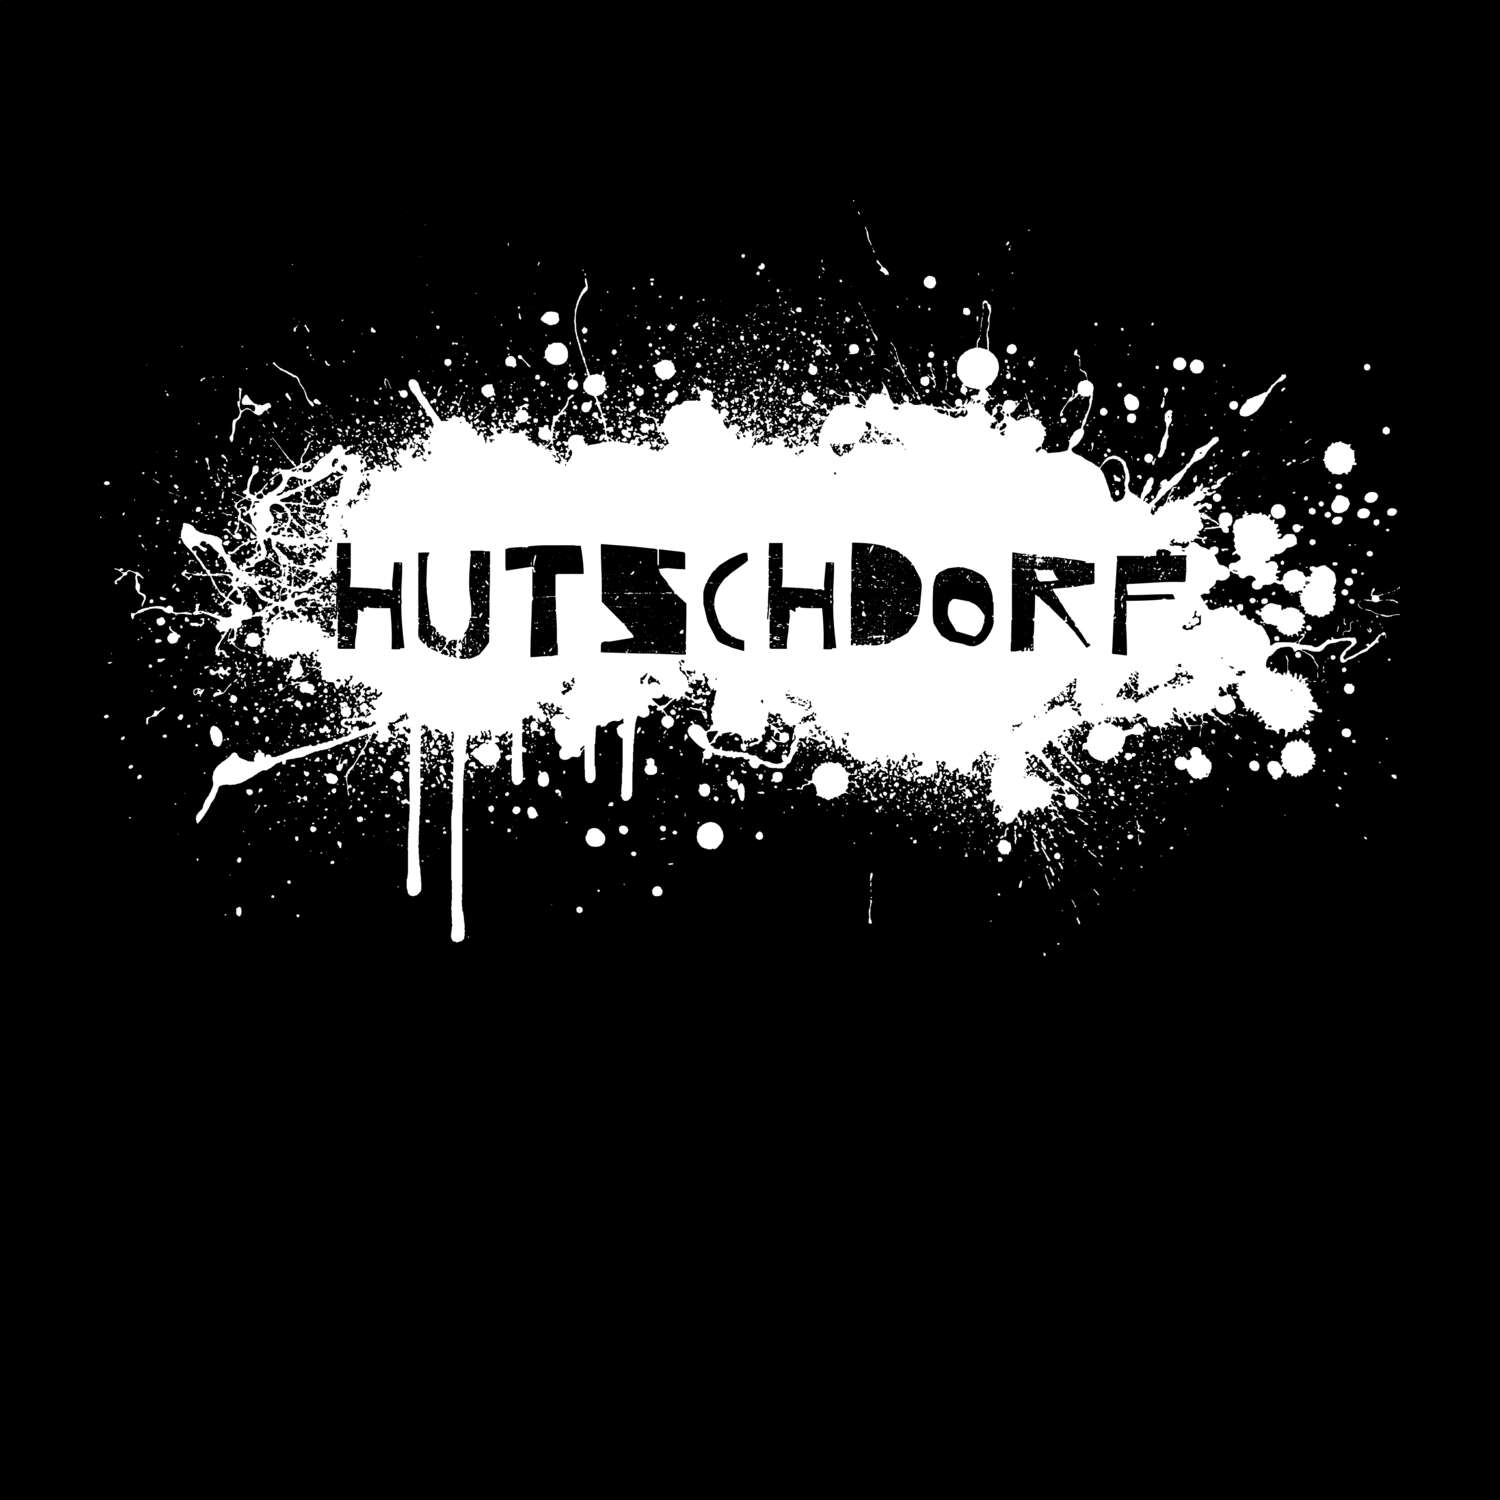 Hutschdorf T-Shirt »Paint Splash Punk«